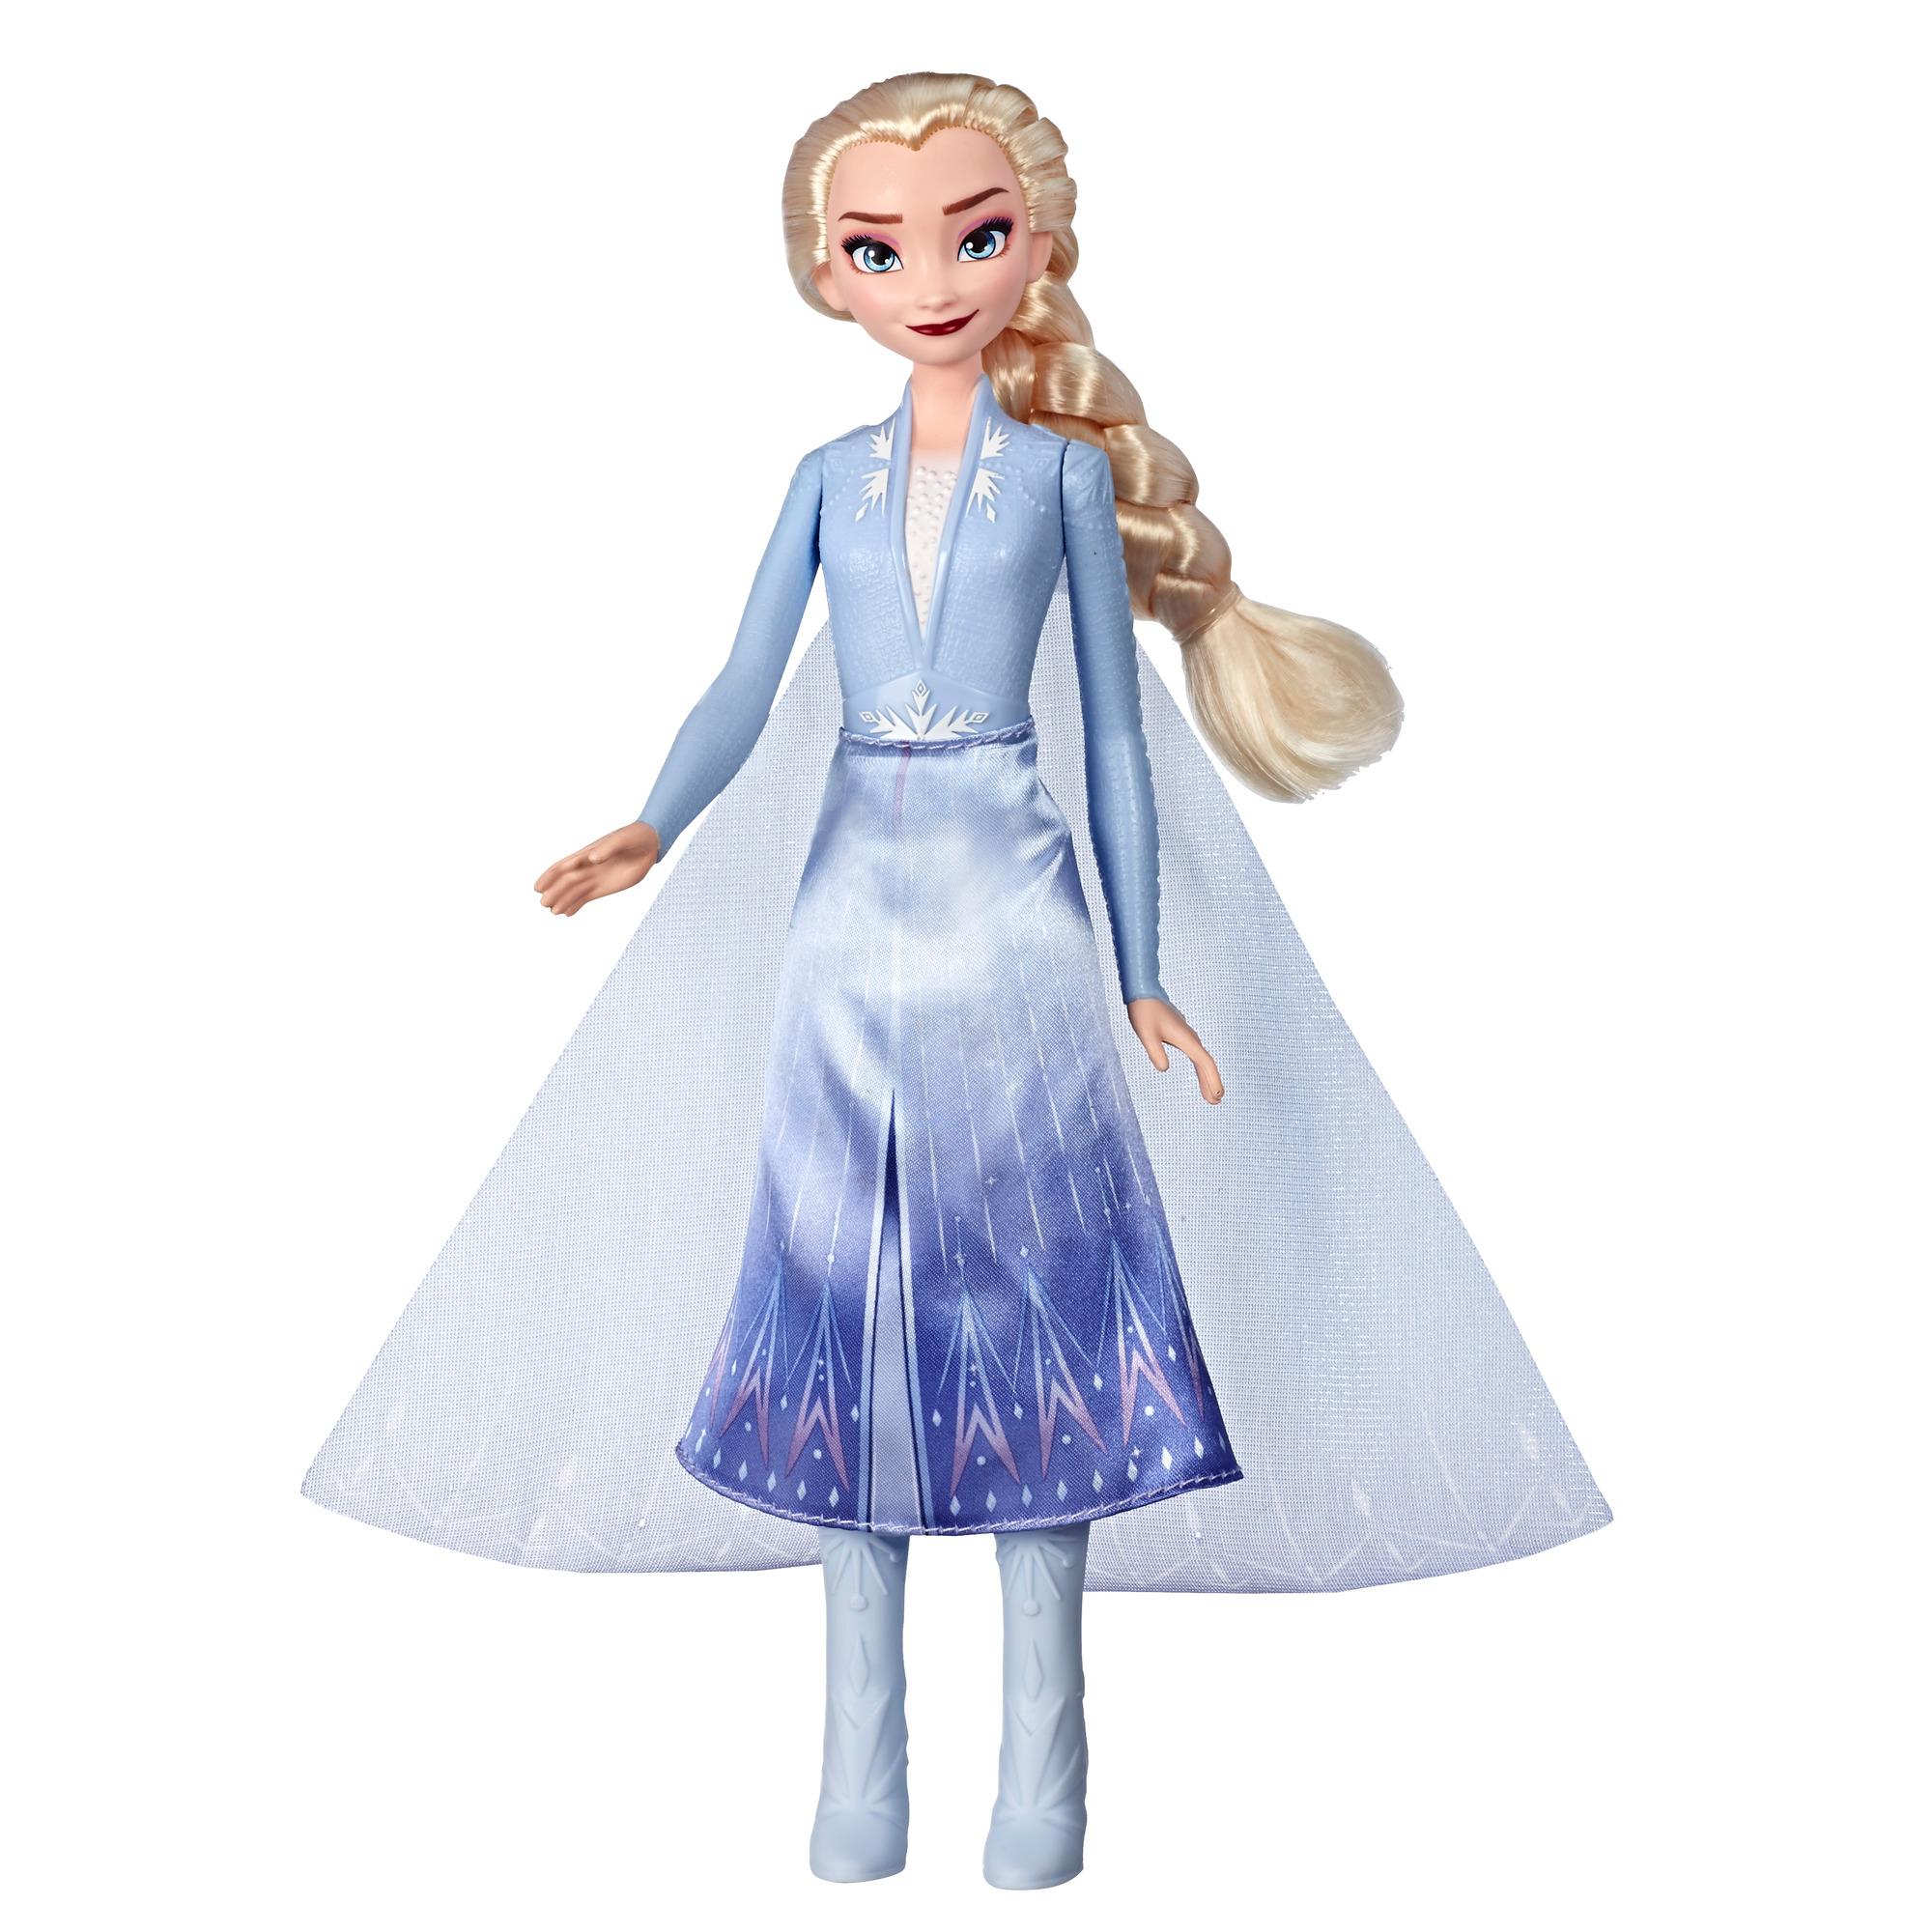 Frozen|Disney Frozen Elsa Magical Fashion Doll